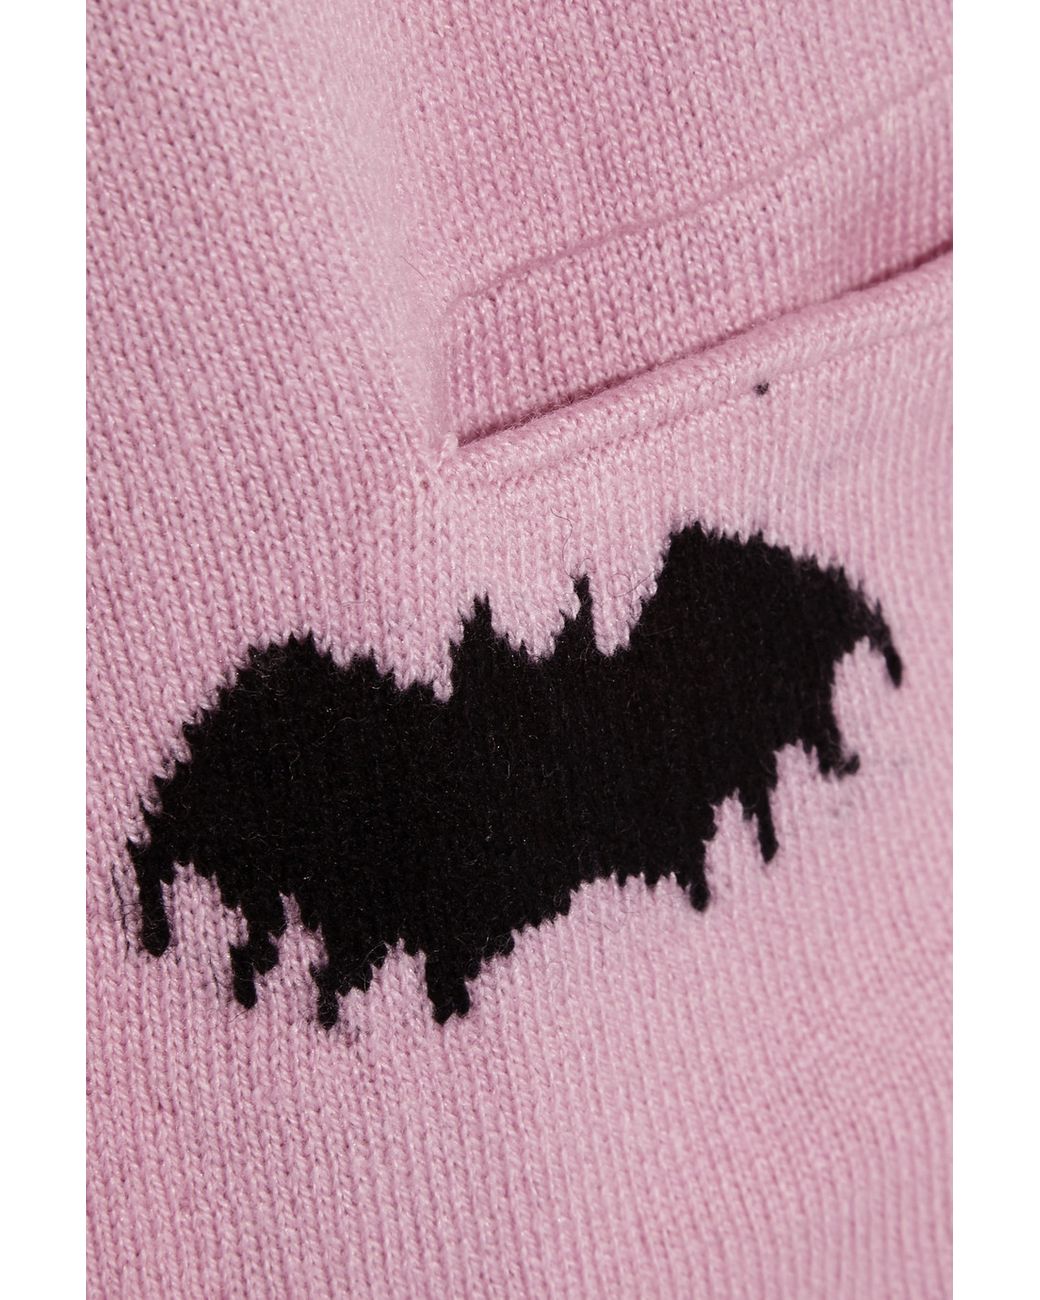 Prehistorisch variabel lanthaan Zoe Karssen Bat-Intarsia Merino Wool-Blend Cardigan in Pink | Lyst Canada